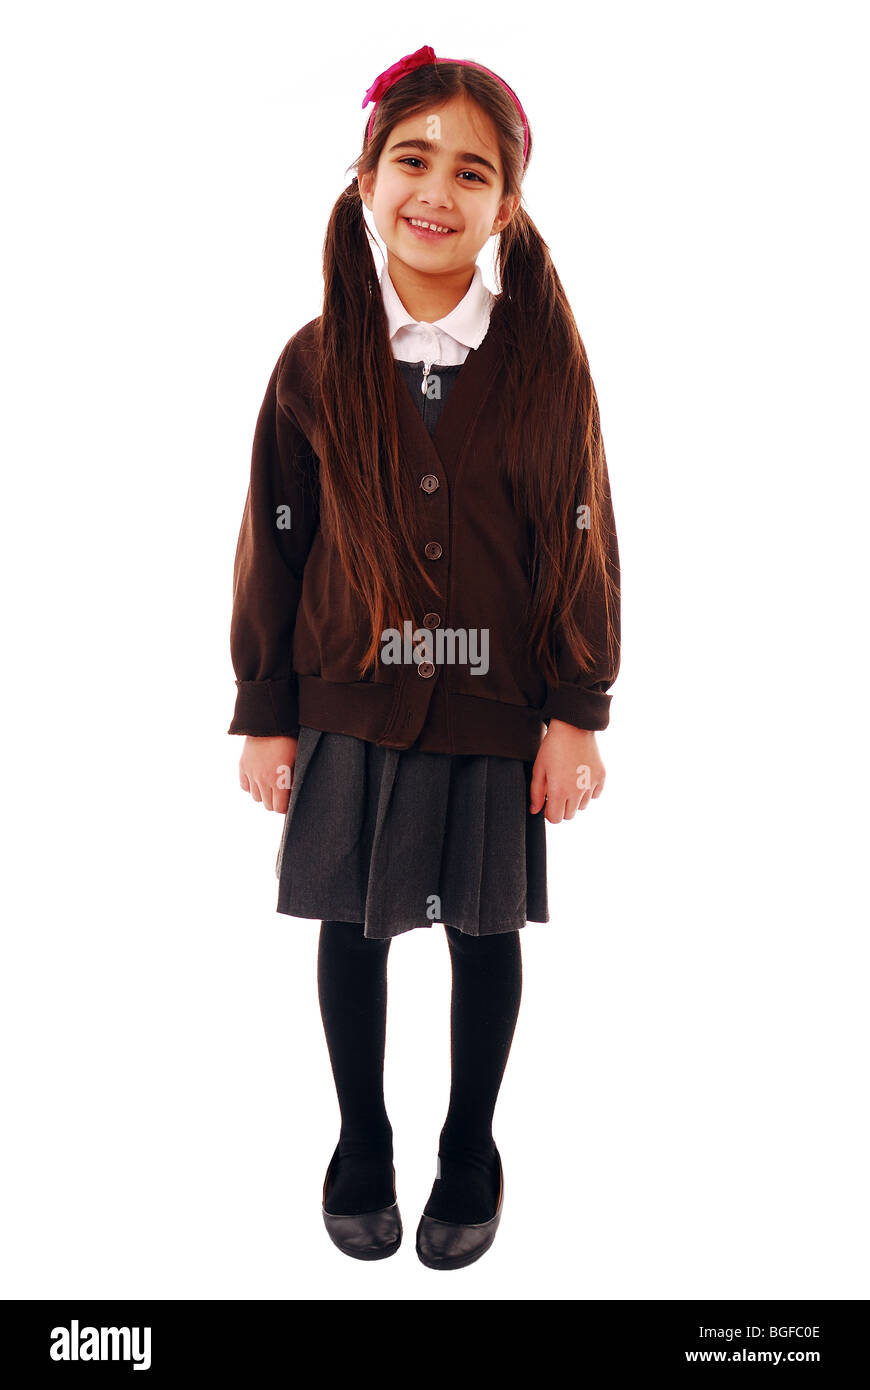 Young girl in school uniform Stock Photo